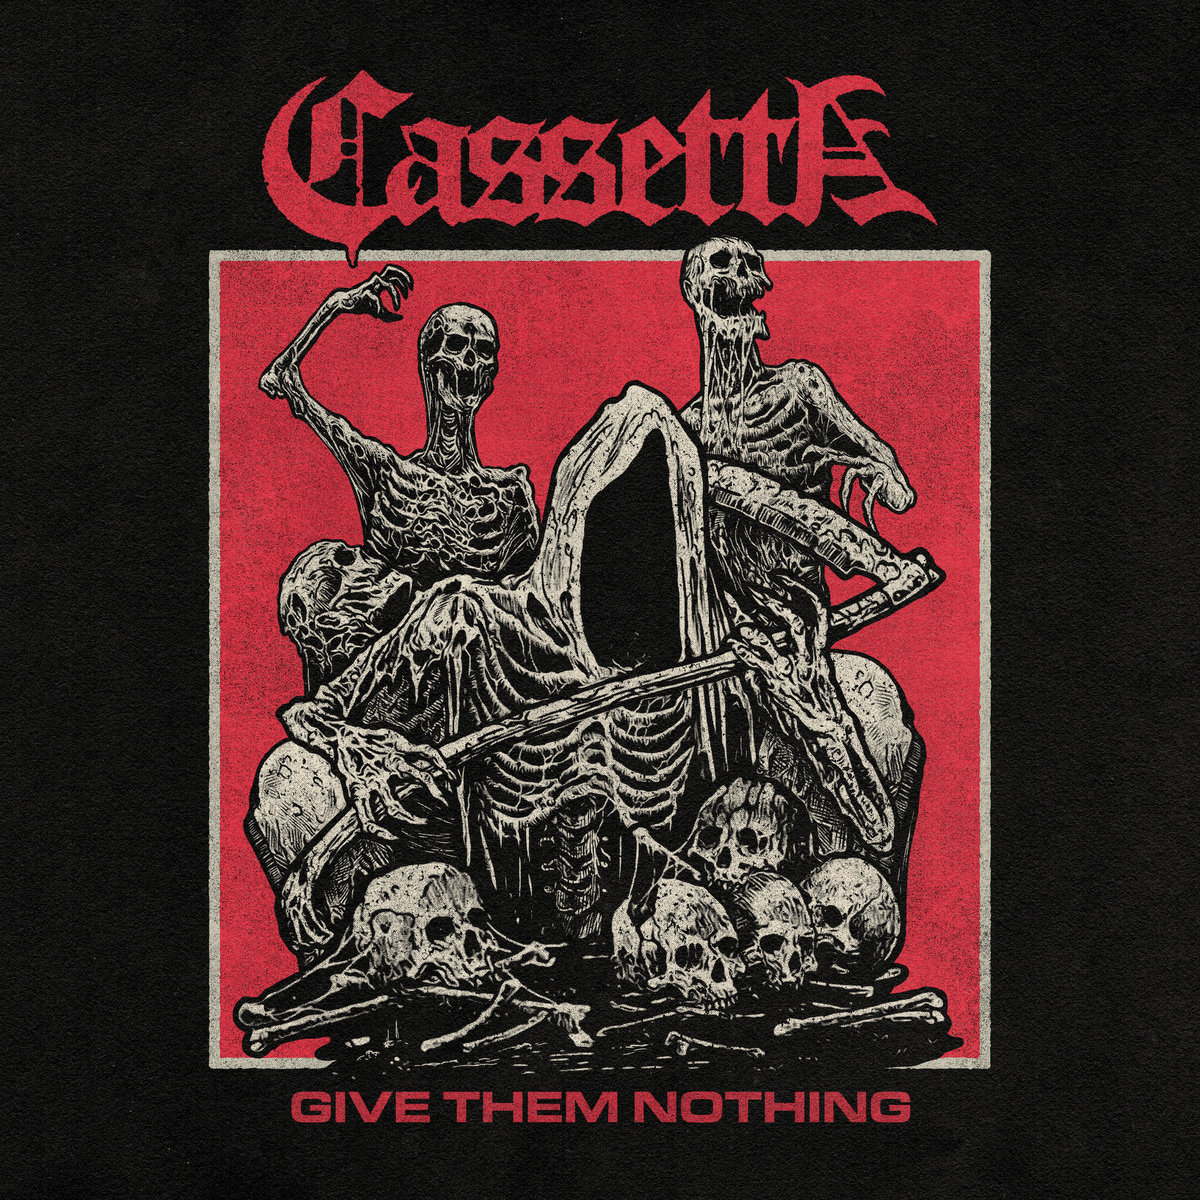 Cassetta “Give Them Nothing” single artwork